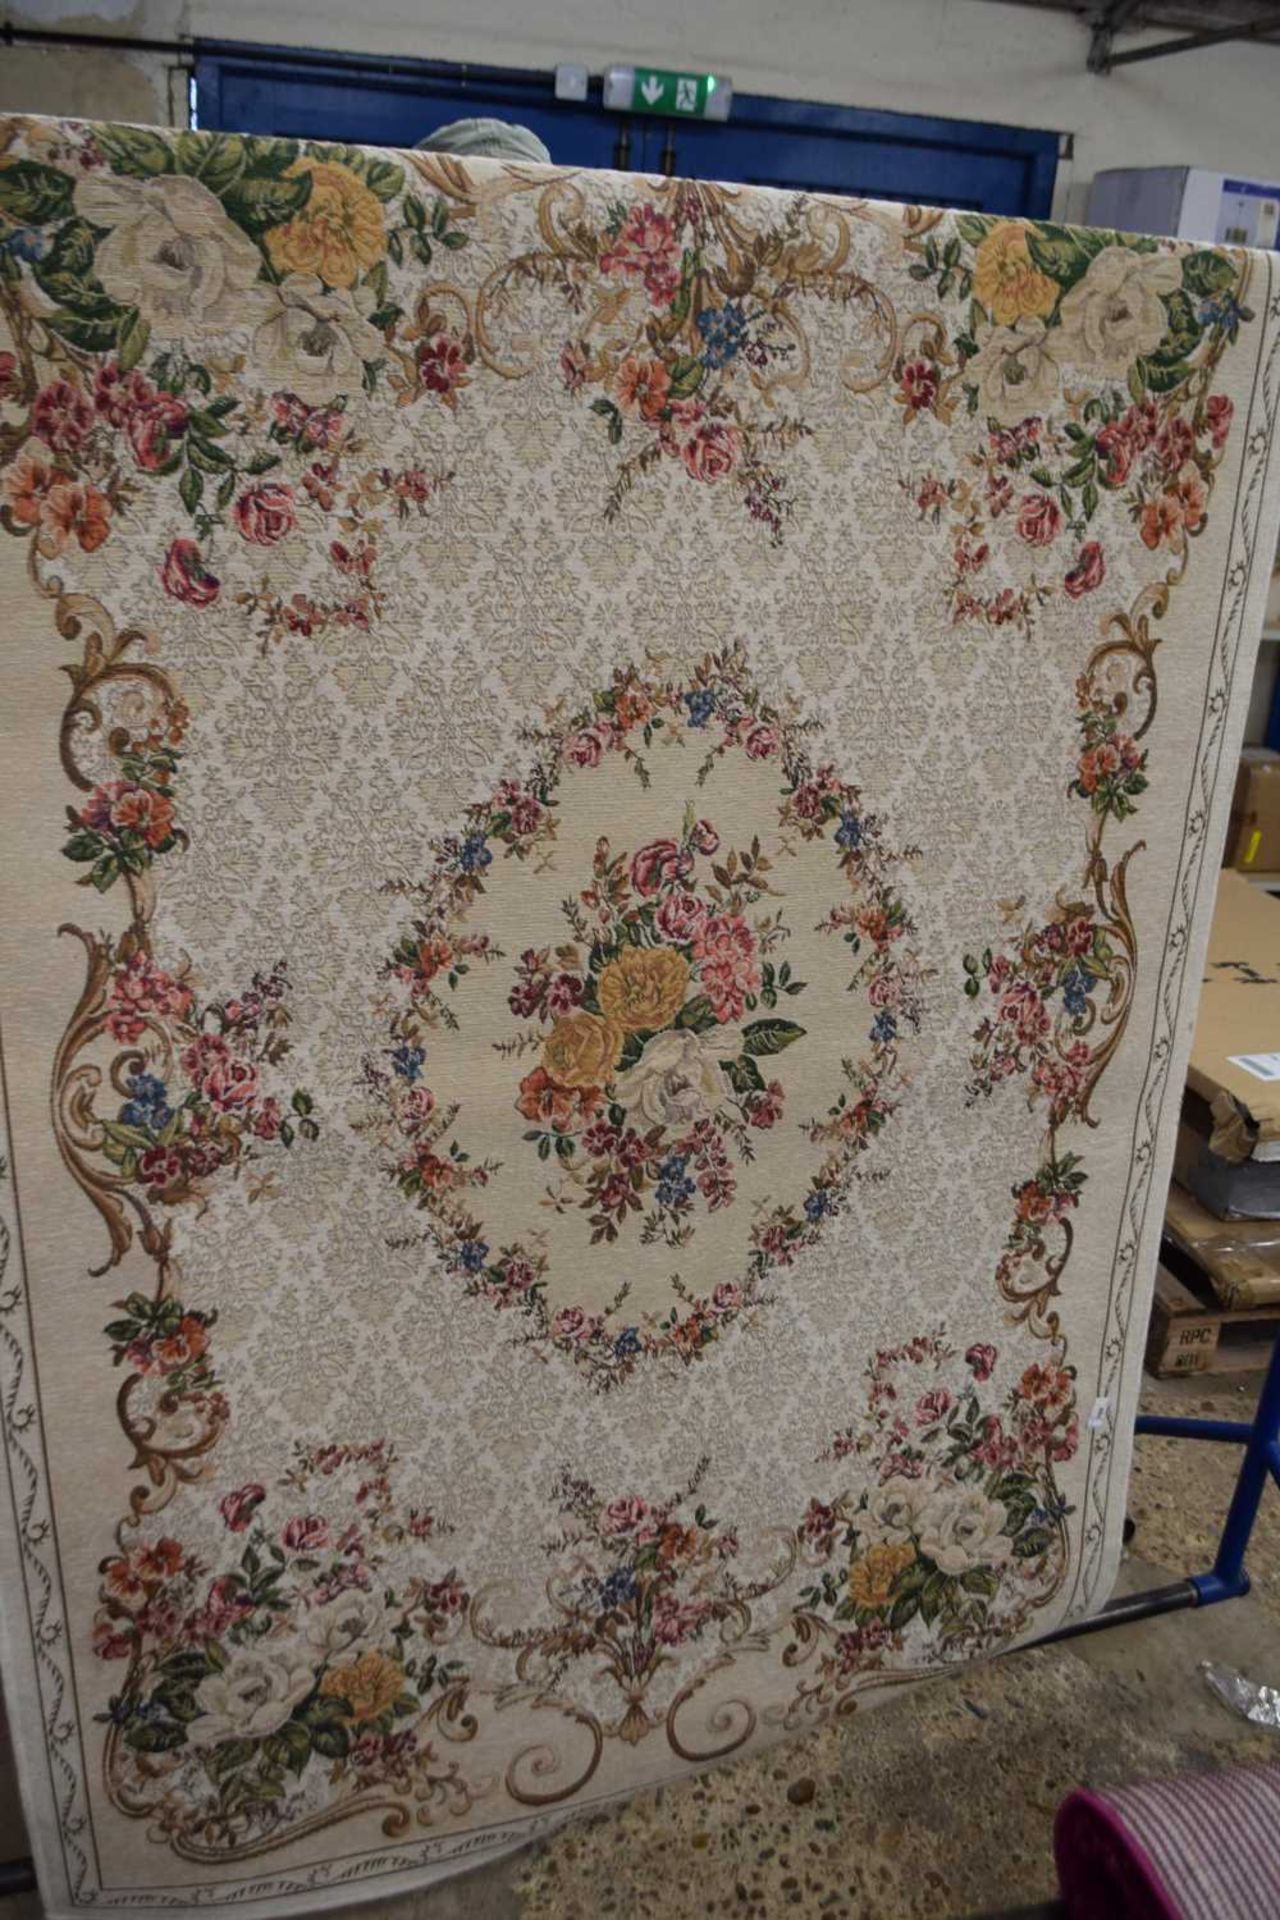 Florence beige floor rug, 120 x 180cm - Image 2 of 2